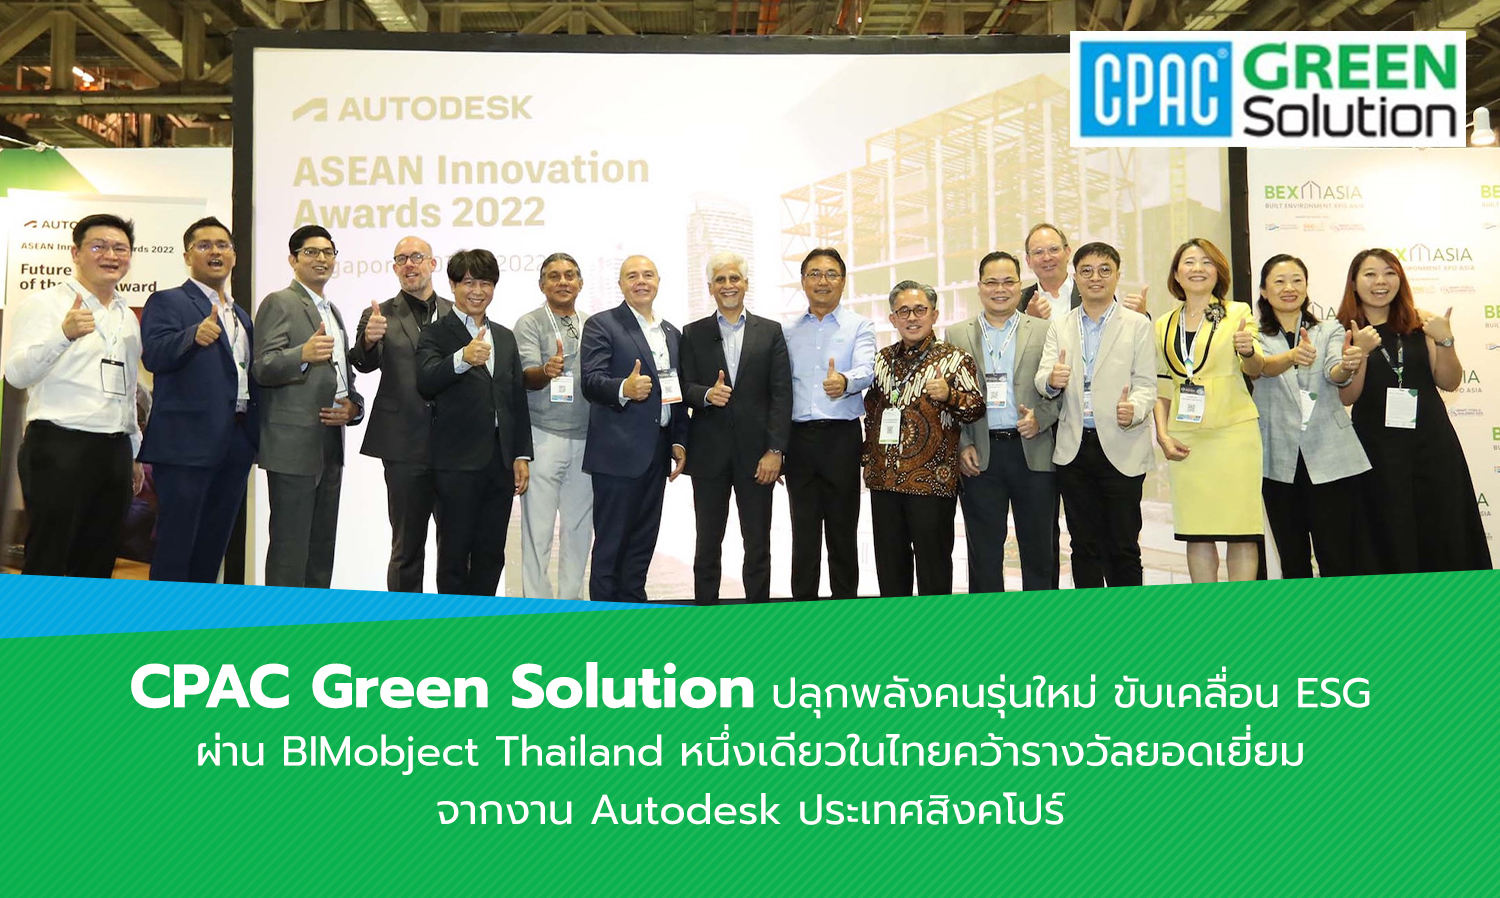 CPAC Green Solution ปลุกพลังคนรุ่นใหม่ ขับเคลื่อน ESG ผ่าน BIMobject Thailand หนึ่งเดียวในไทยคว้ารางวัลยอดเยี่ยม จากงาน Autodesk ประเทศสิงคโปร์